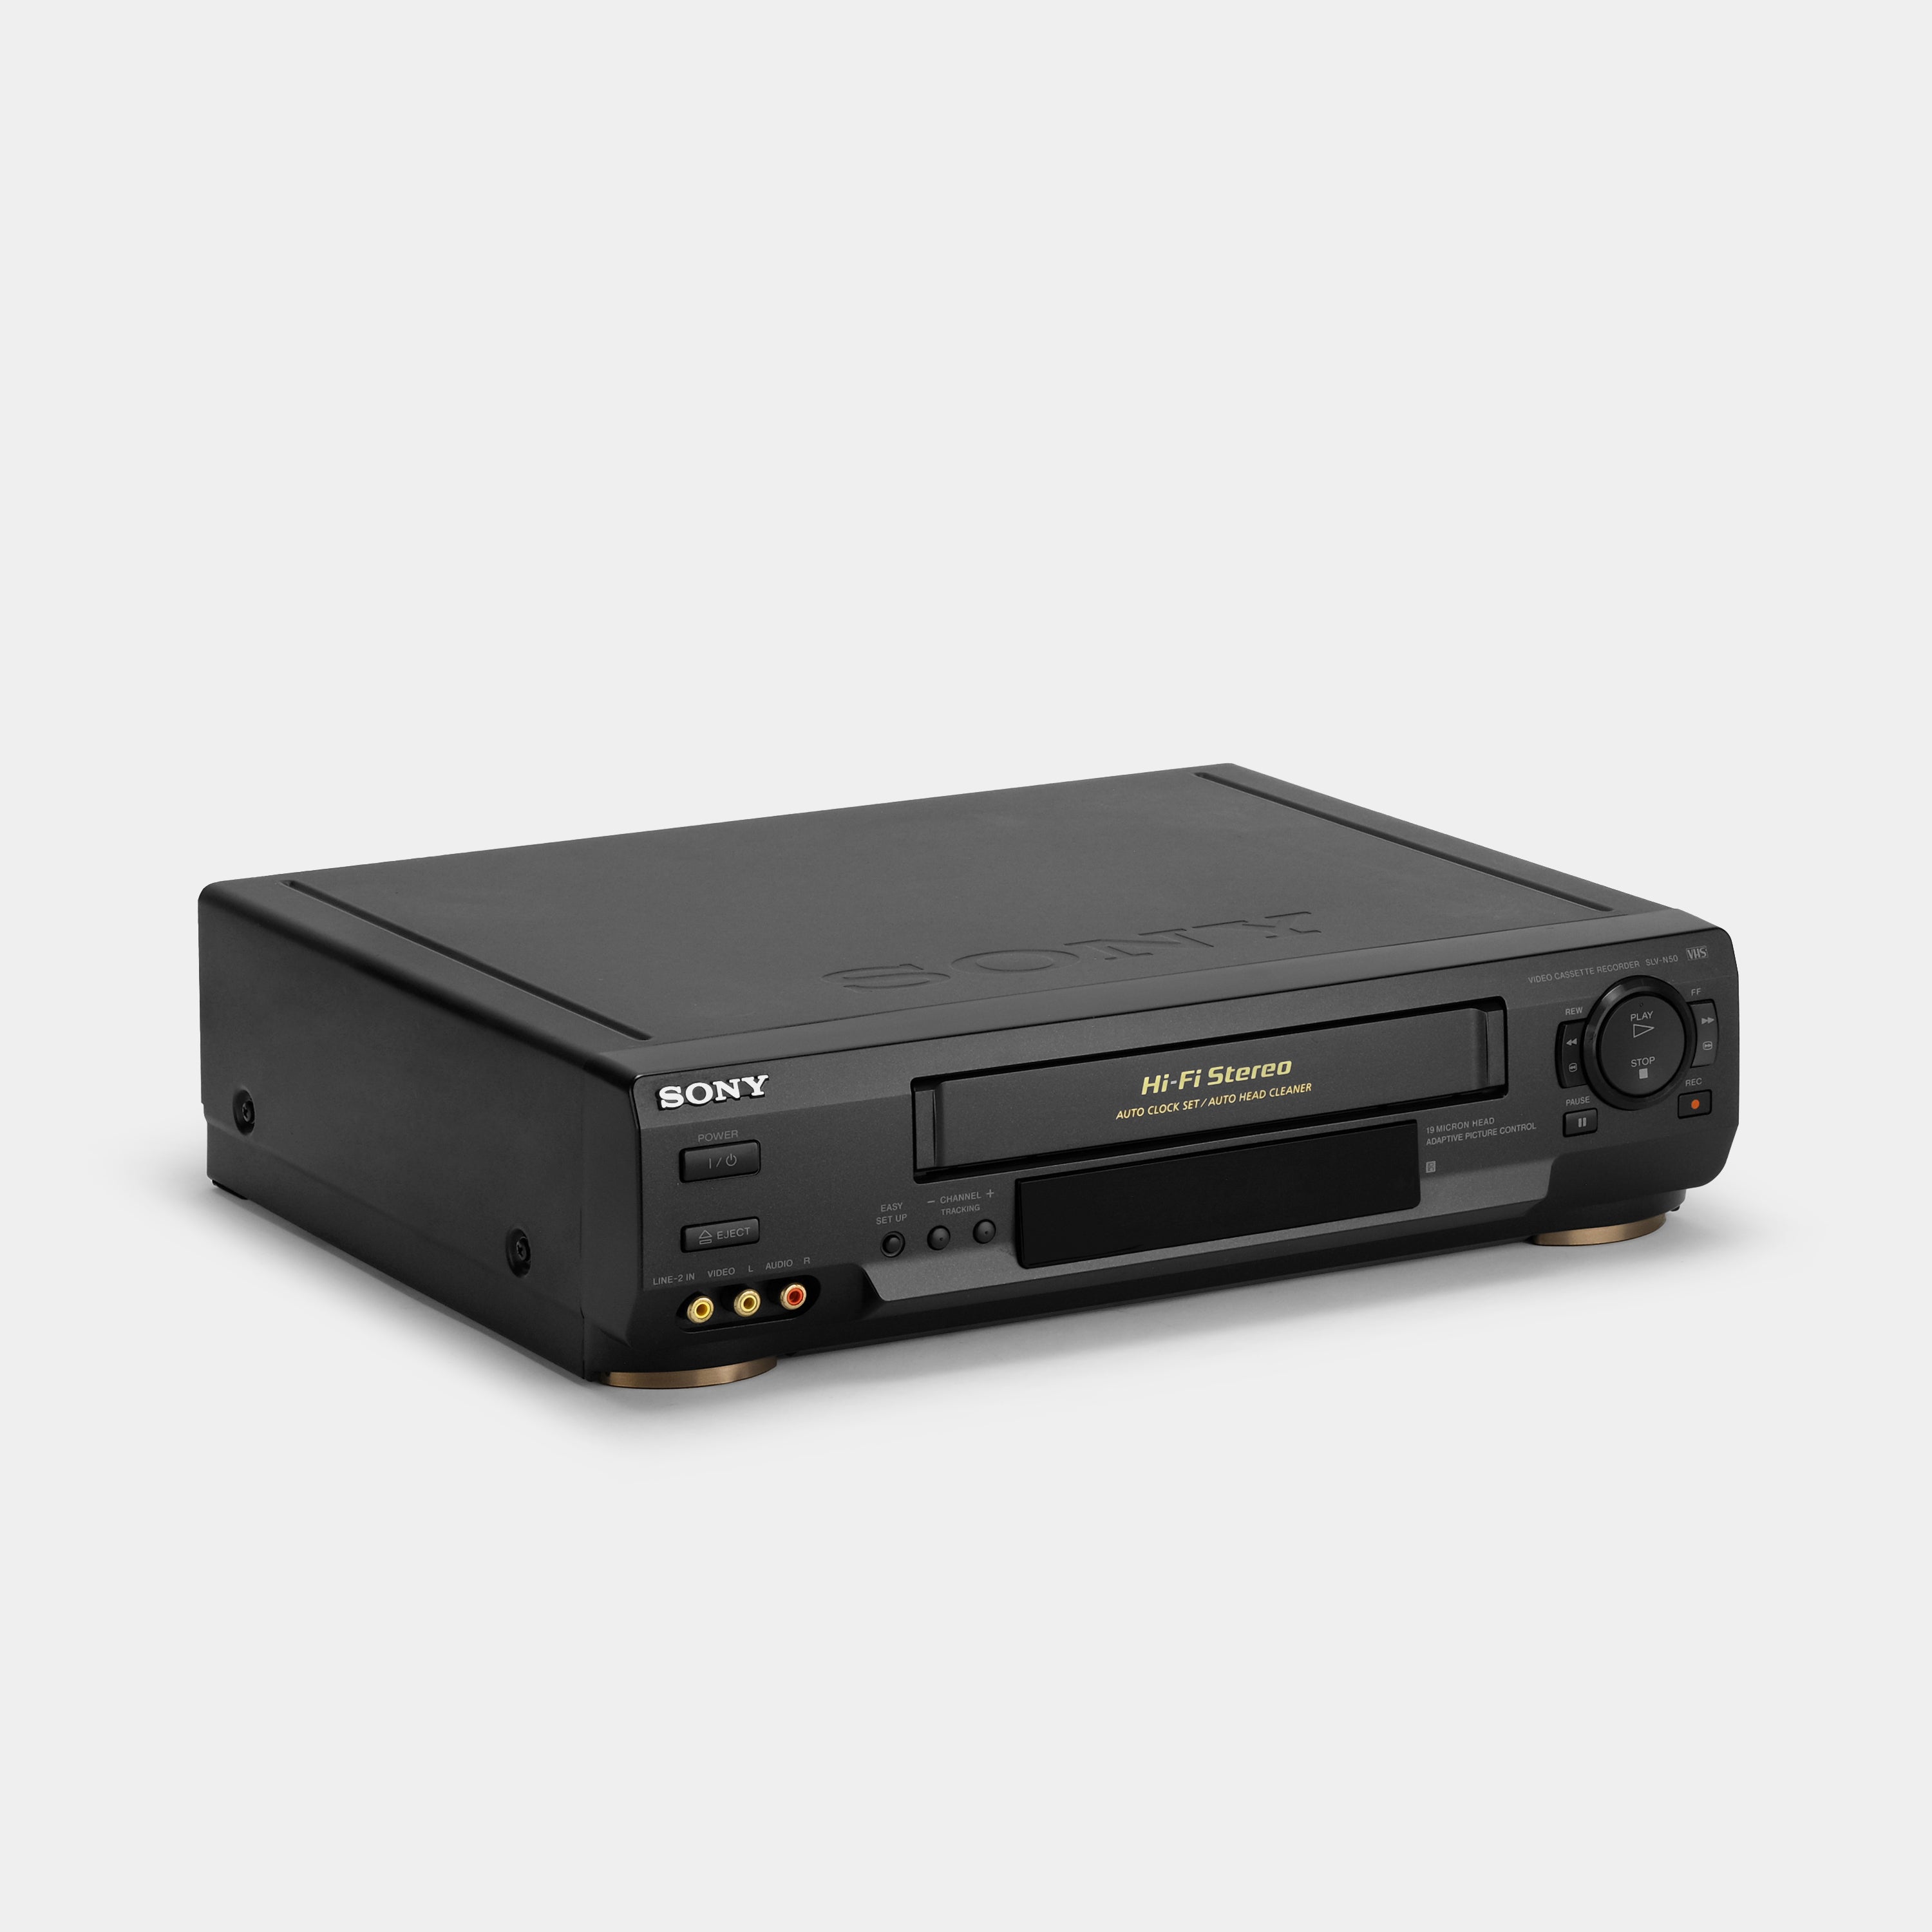 Sony SLV-N50 VCR VHS Player